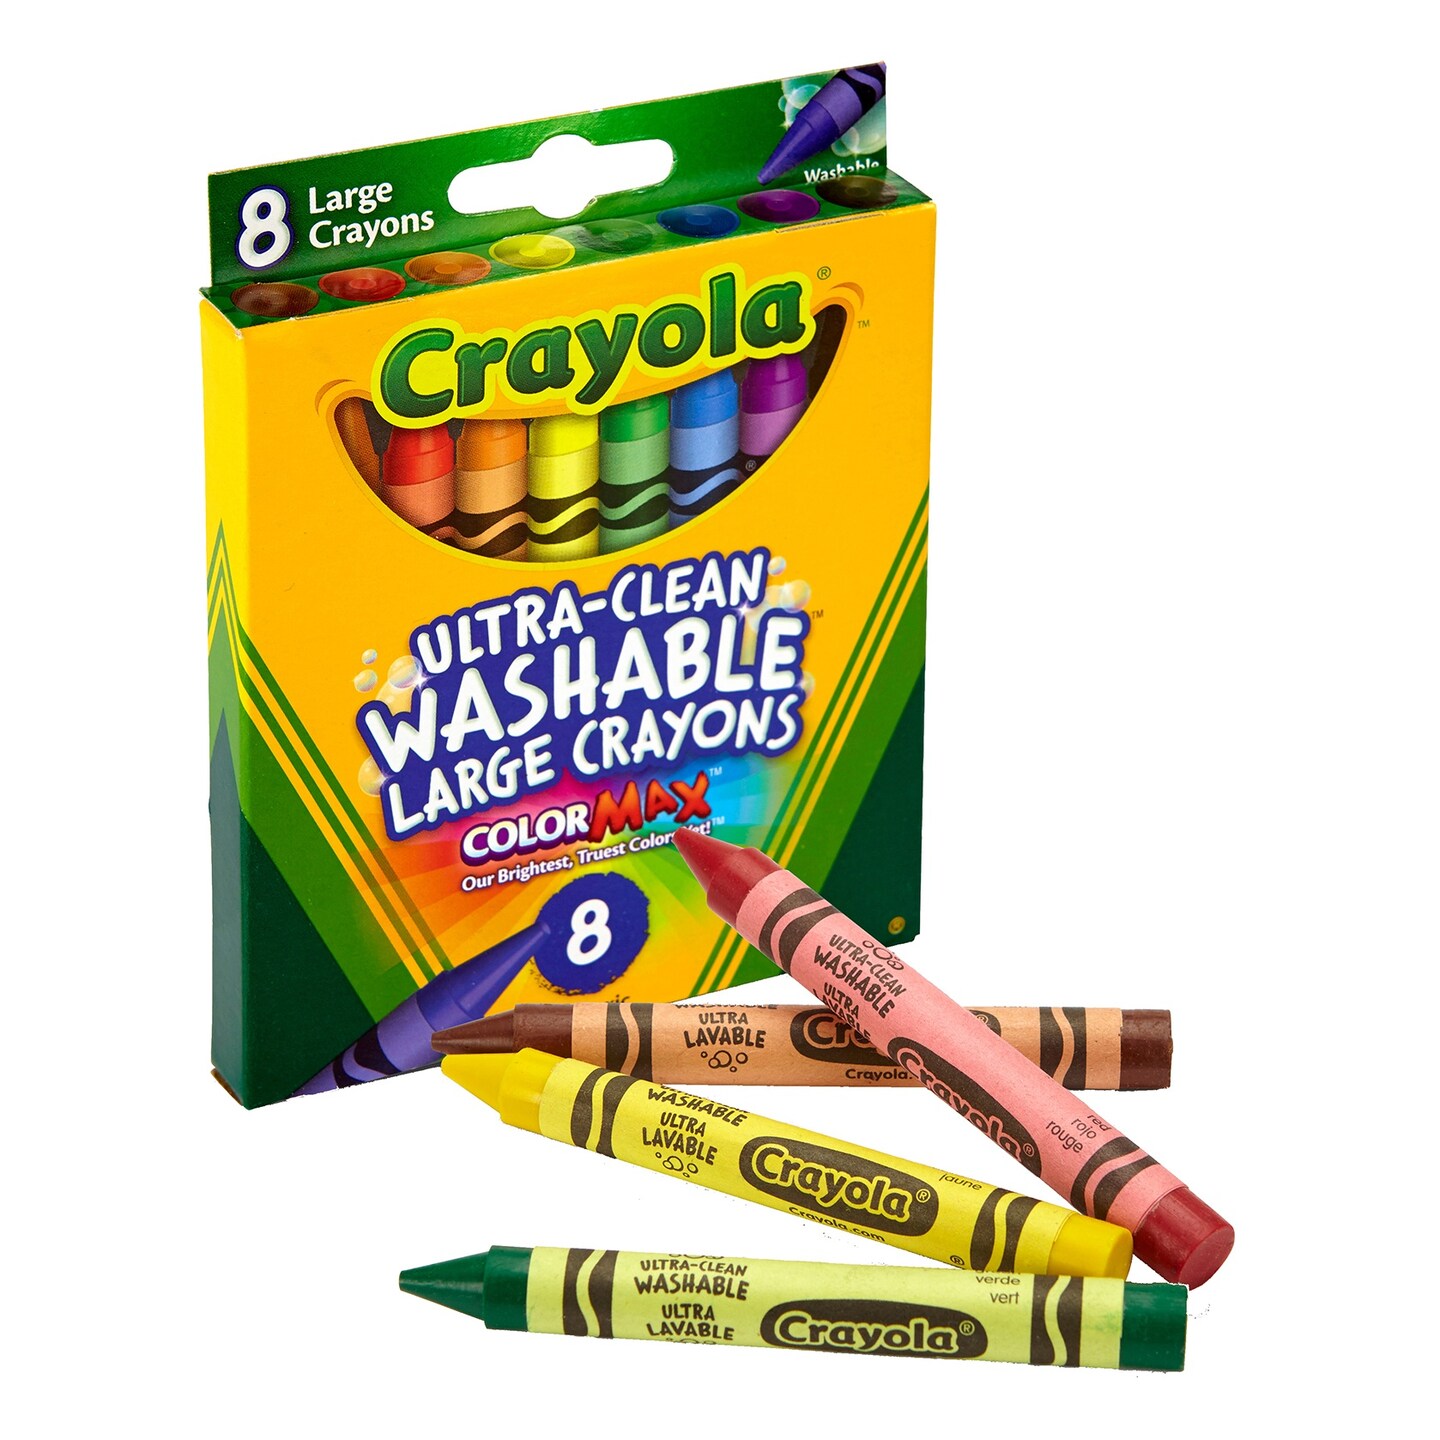 Crayola Large Size Crayons 8 ct